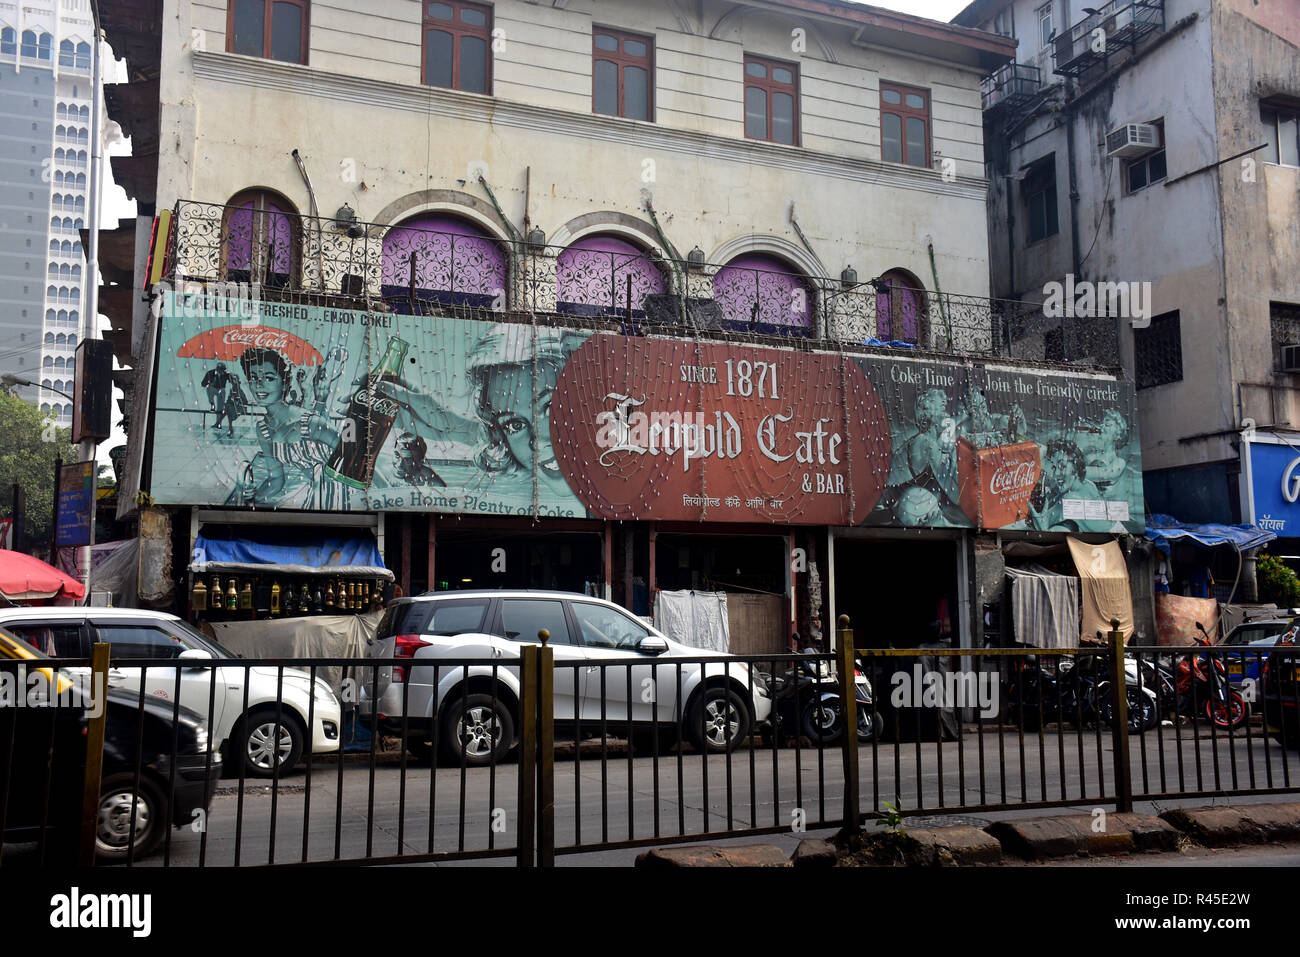 Leopold cafe mumbai hi-res stock photography and images - Alamy